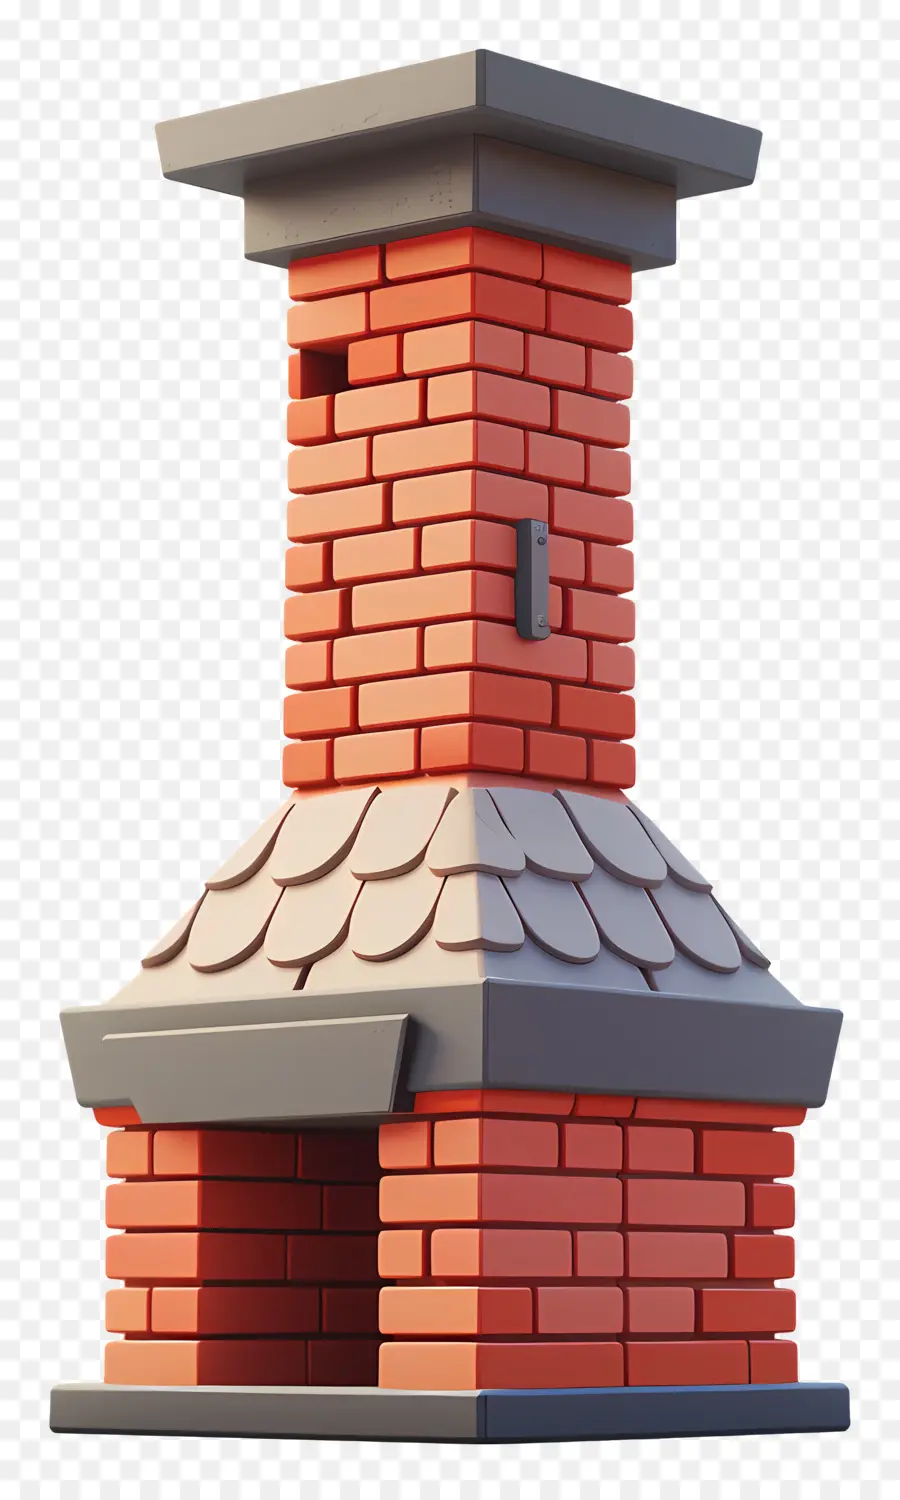 chimney chimney brick tile roof smoke stacks